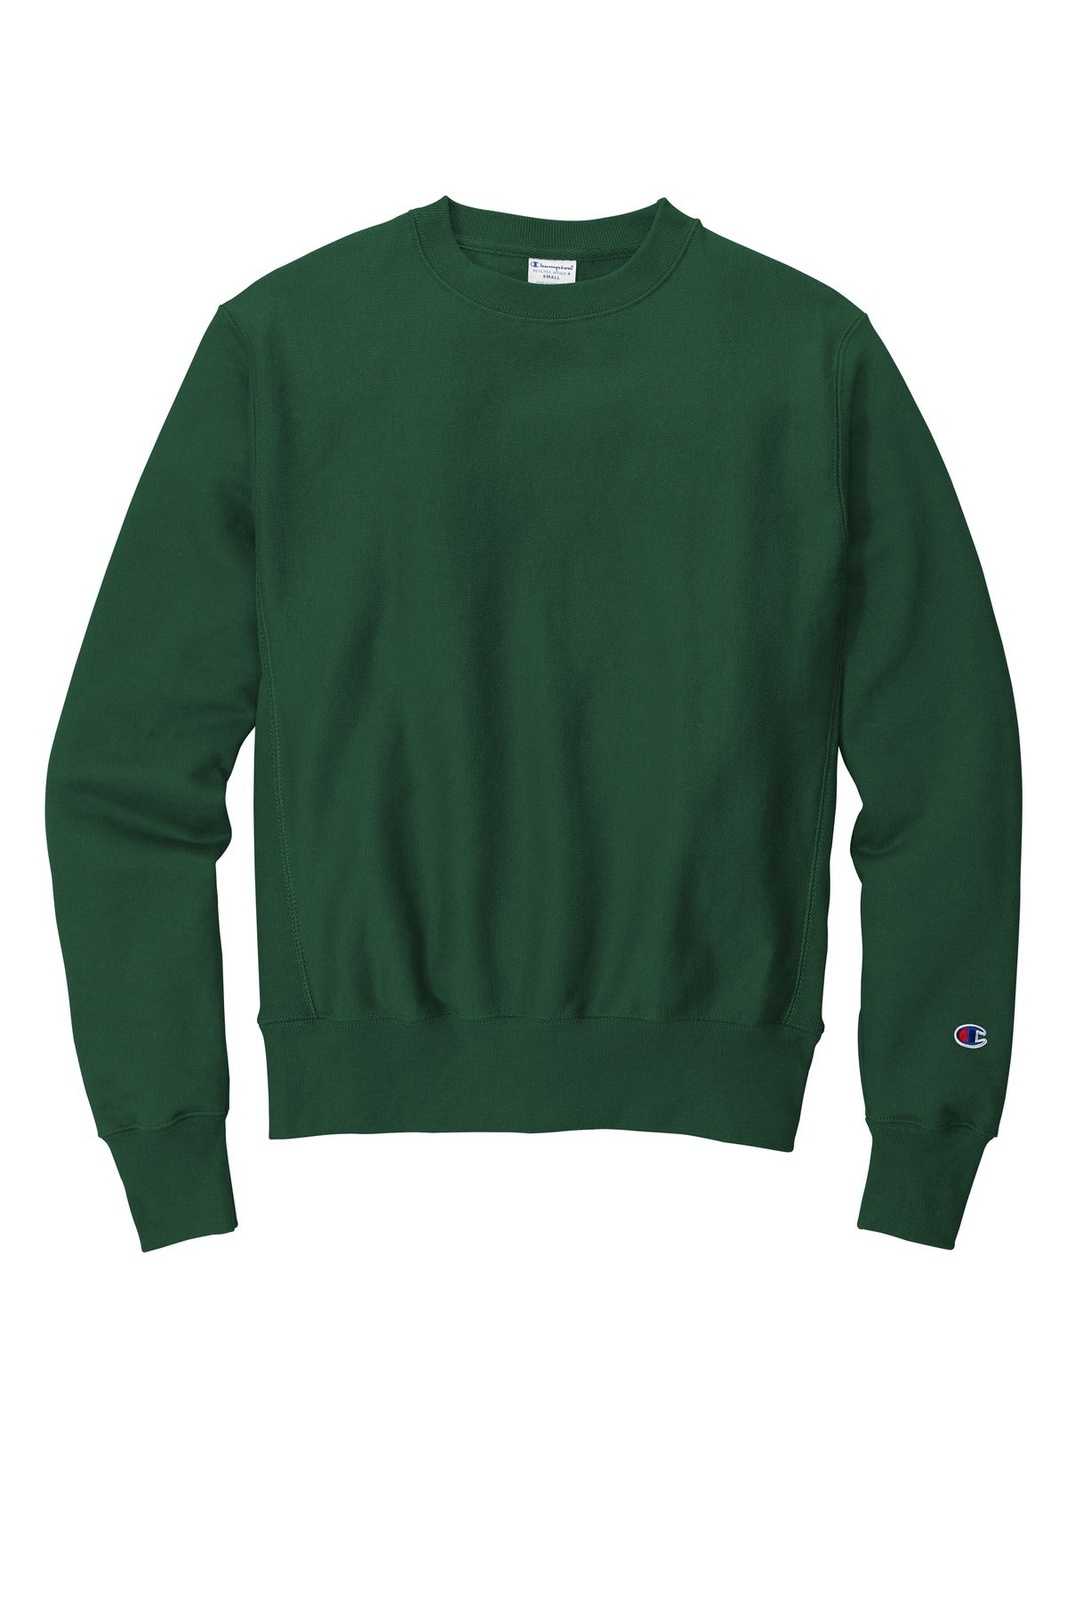 Champion S149 Reverse Weave Crewneck Sweatshirt - Dark Green